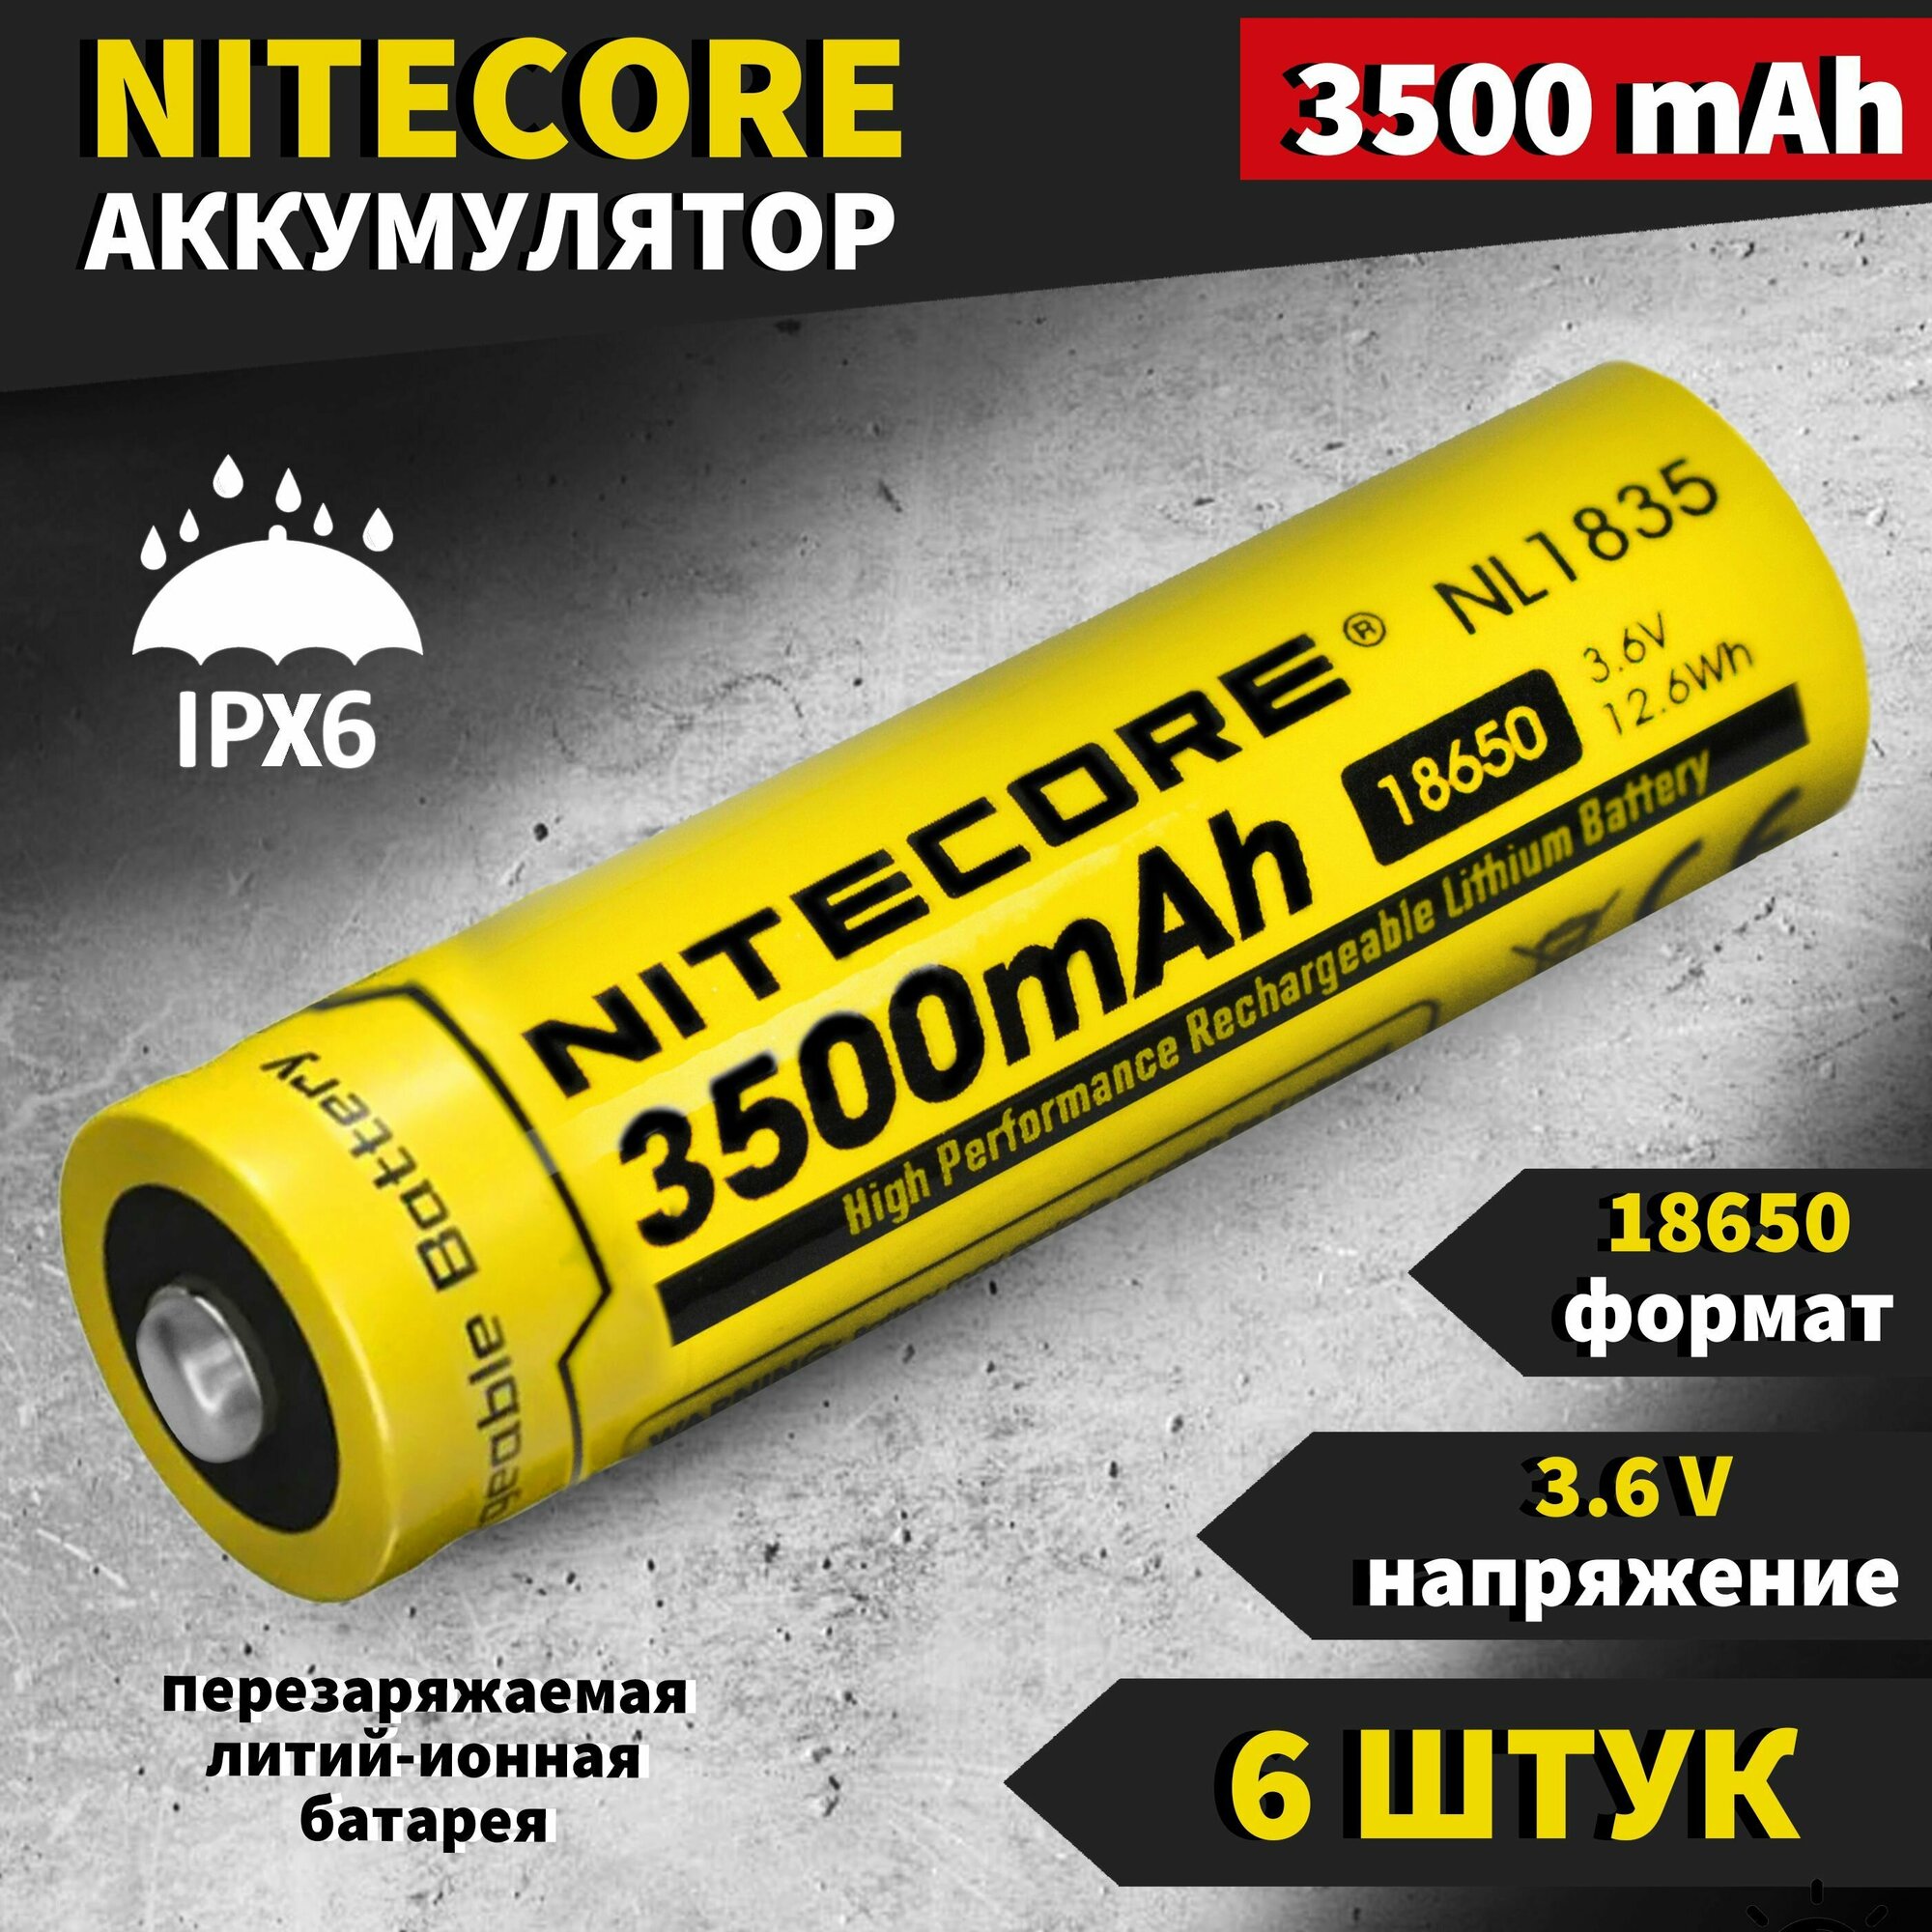 Аккумулятор Li-Ion NITECORE 18650 3500 mAh 3.6V (10 штук) / Перезаряжаемый литий-ионный элемент питания (защищенный) / Аккумуляторная батарейка